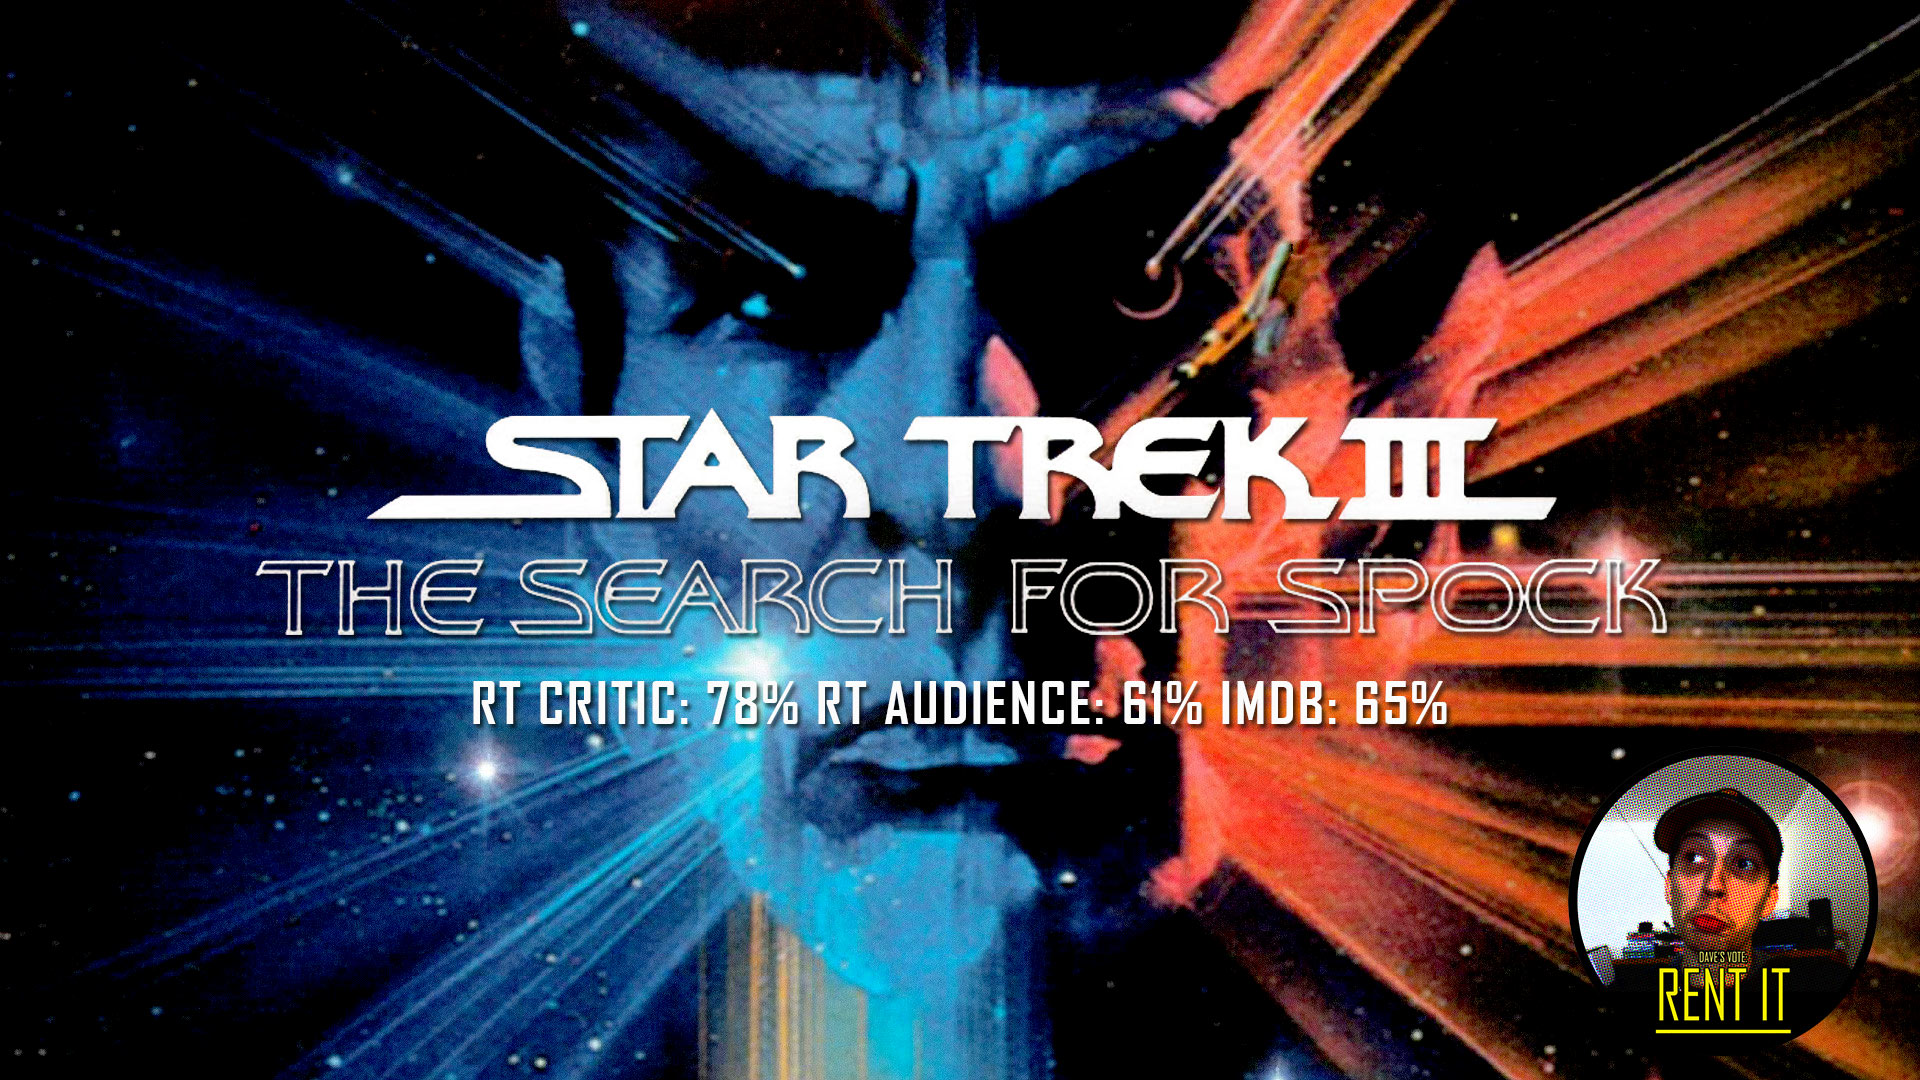 Star Trek Iii The Search For Spock Watch Online